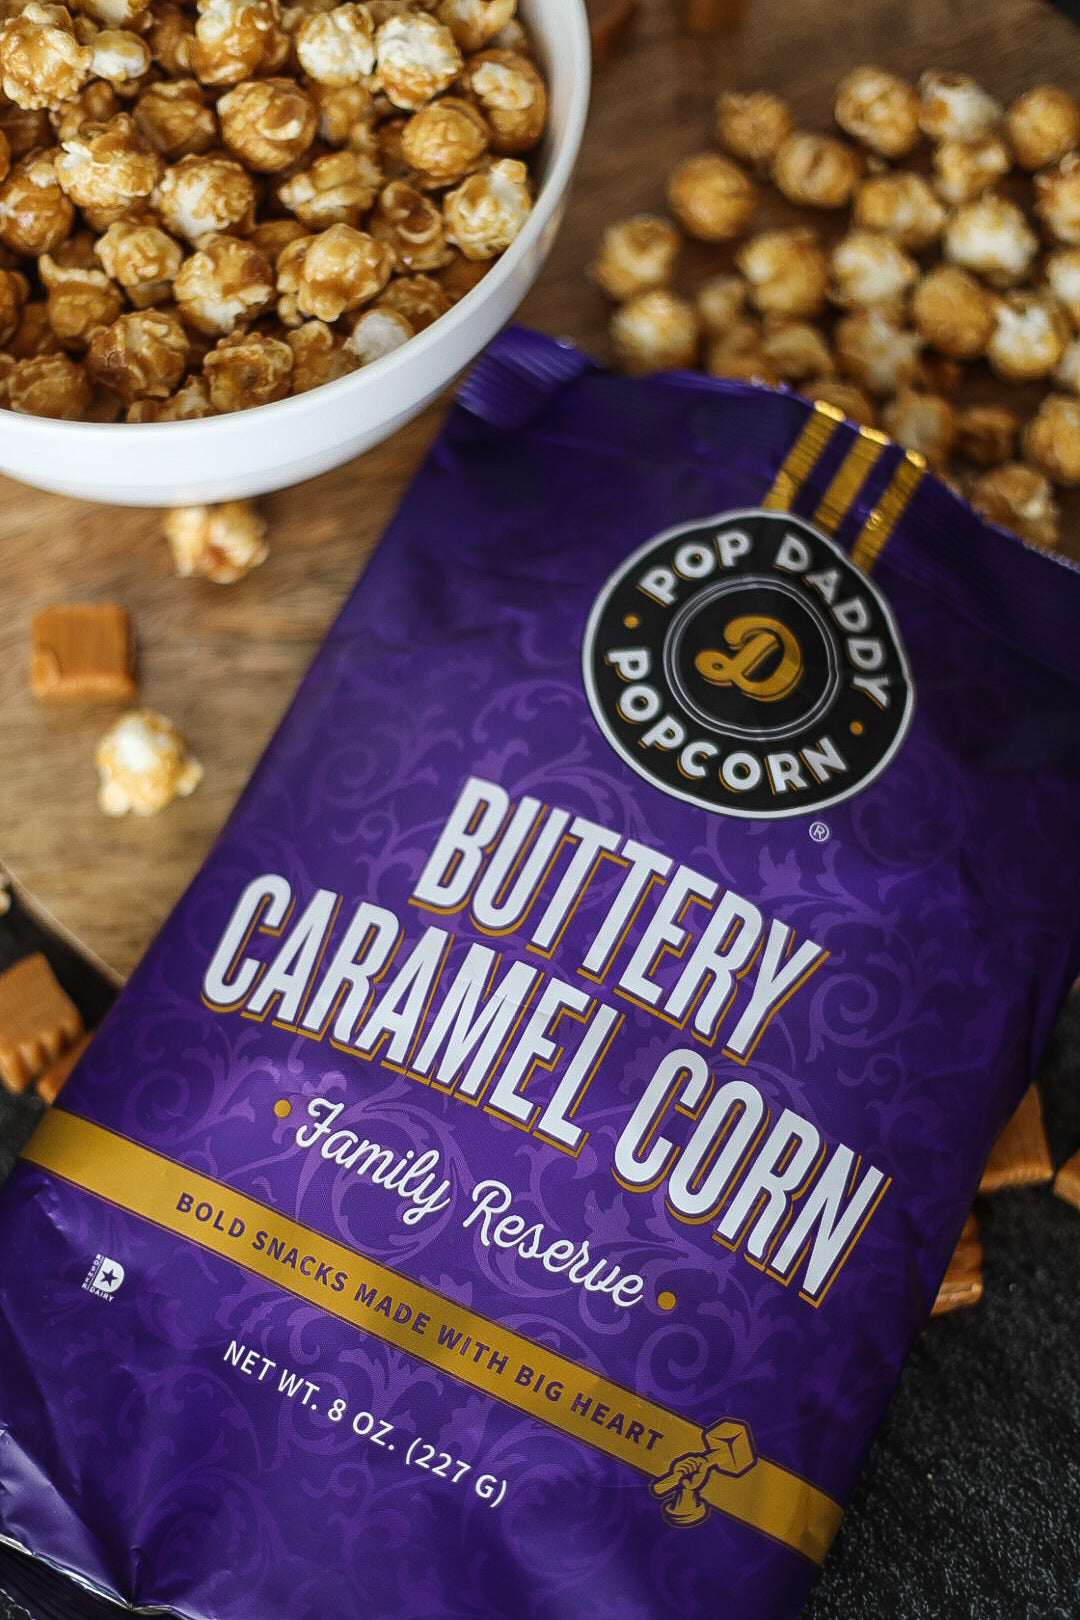 6 Bag Premium Buttery Caramel Corn Family Reserve